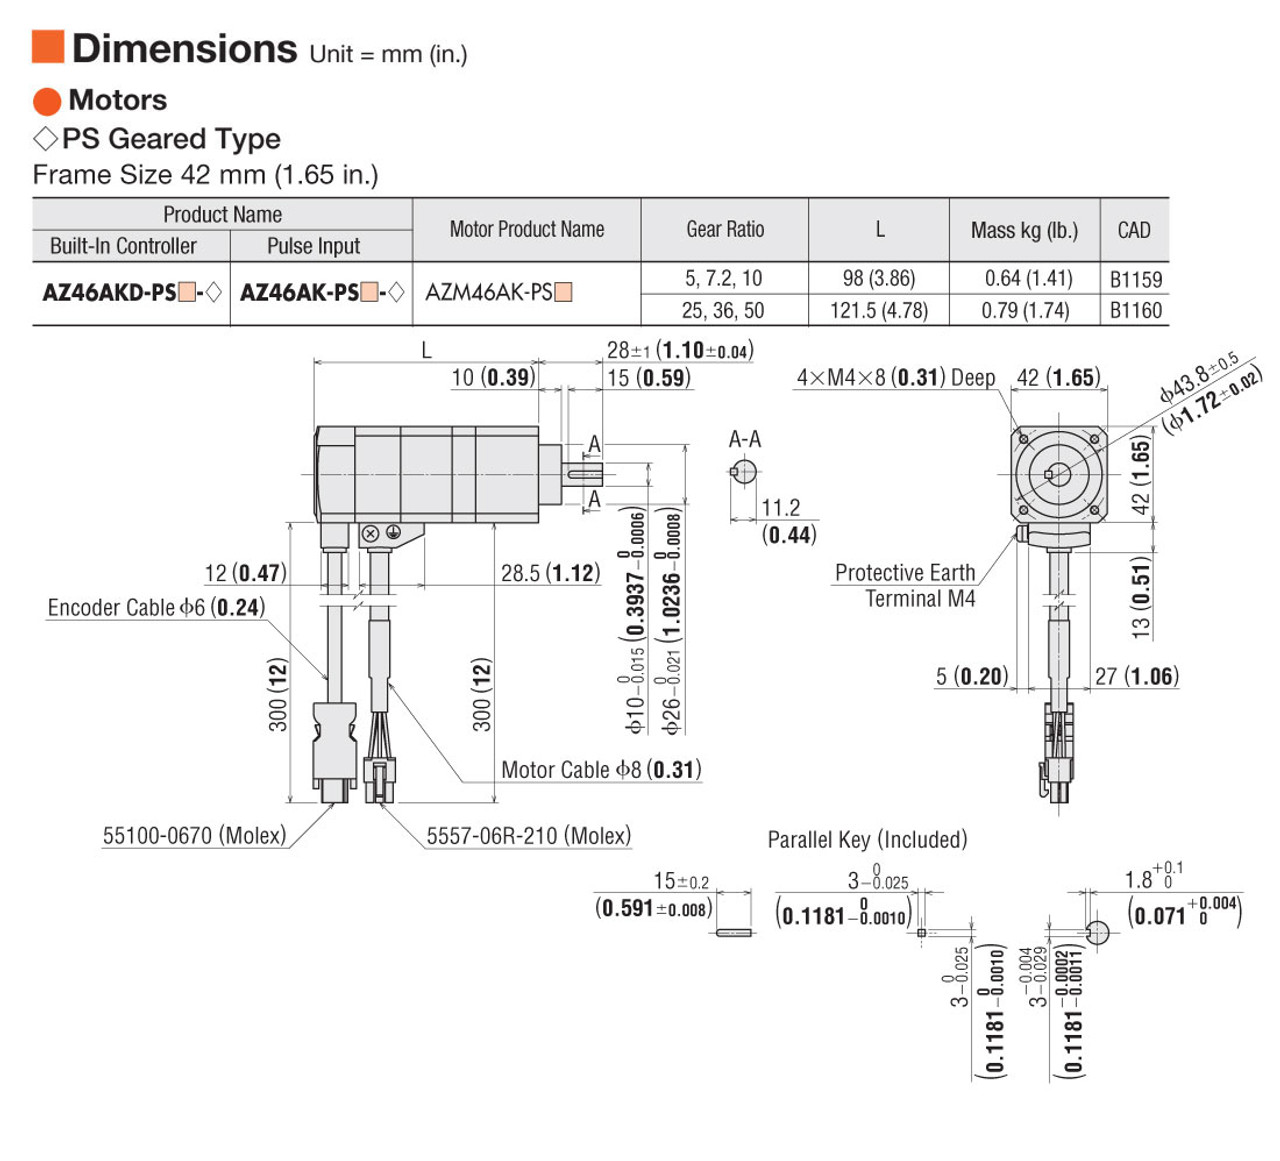 AZ46AKD-PS50 - Dimensions